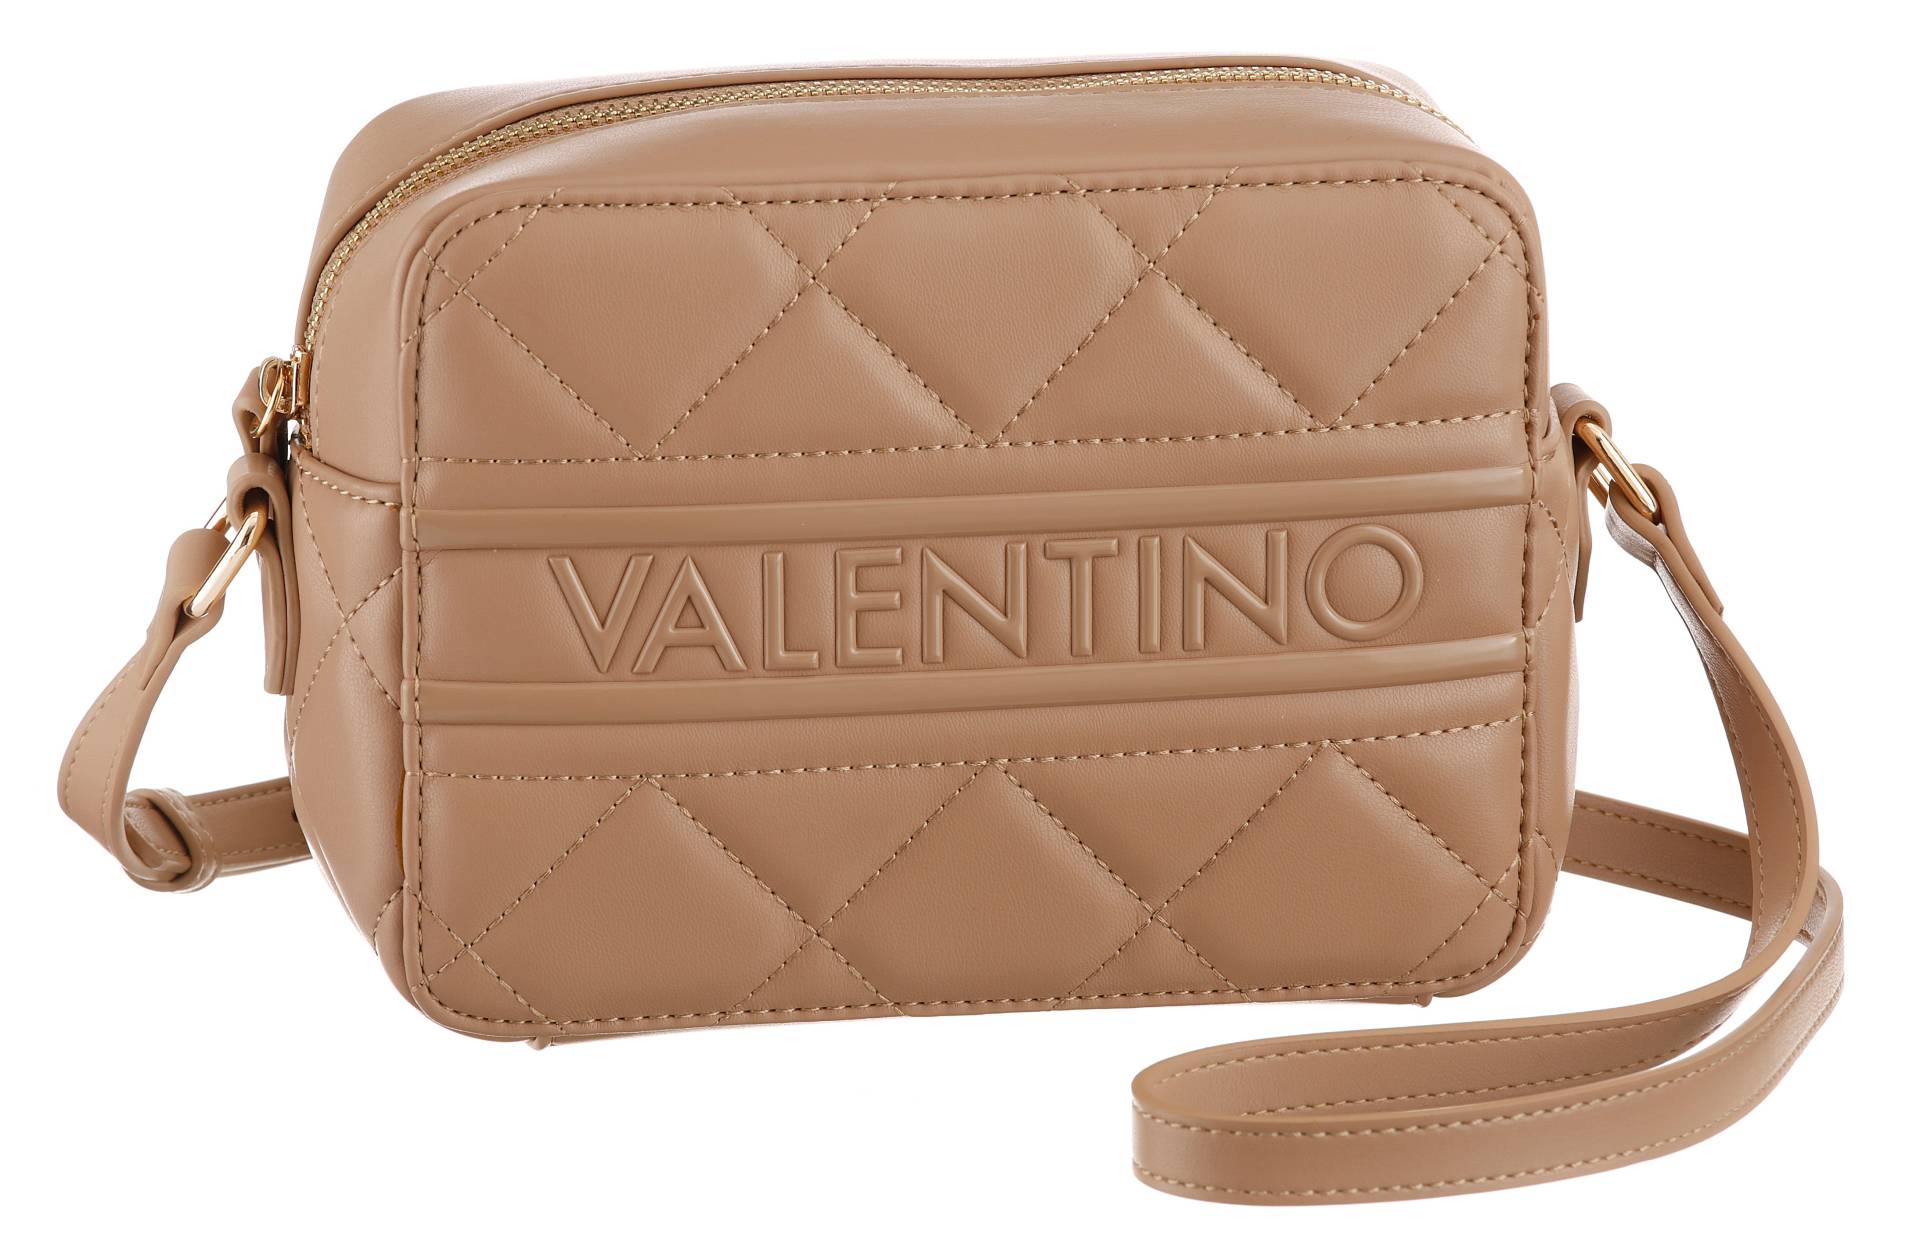 VALENTINO BAGS Umhängetasche "ADA", Handtasche Damen Tasche Damen Schultertasche von Valentino Bags